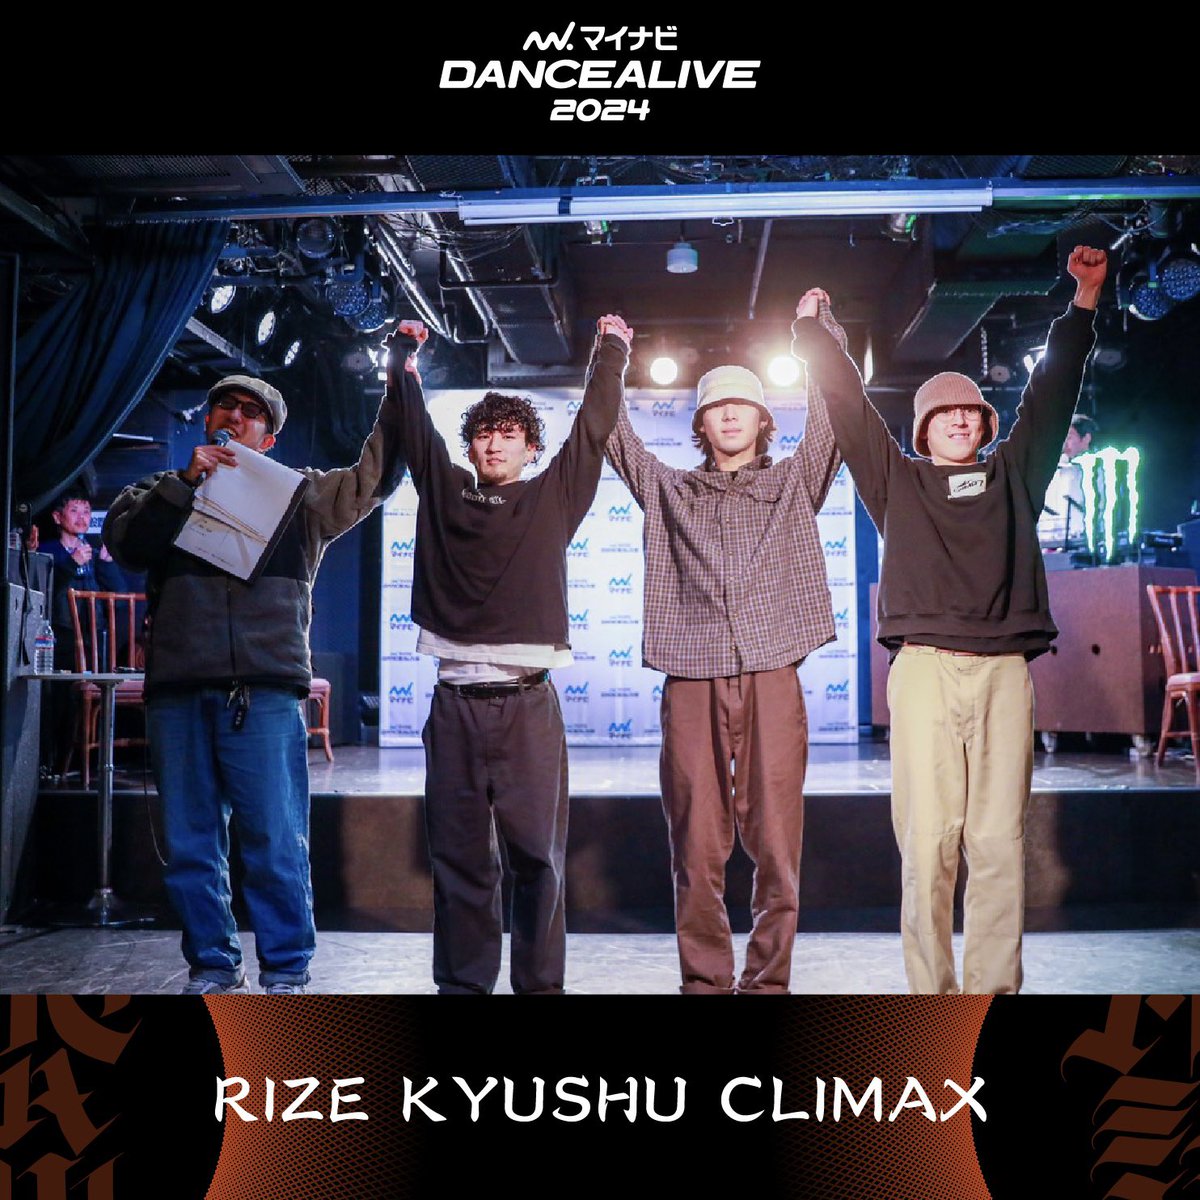 🌐🌐 RIZE KUYSHU CLIMAX WINNER ⁡ 〜WINNER〜 slam ⁡ #マイナビダンスアライブ #dancealive #AlwaysYouth